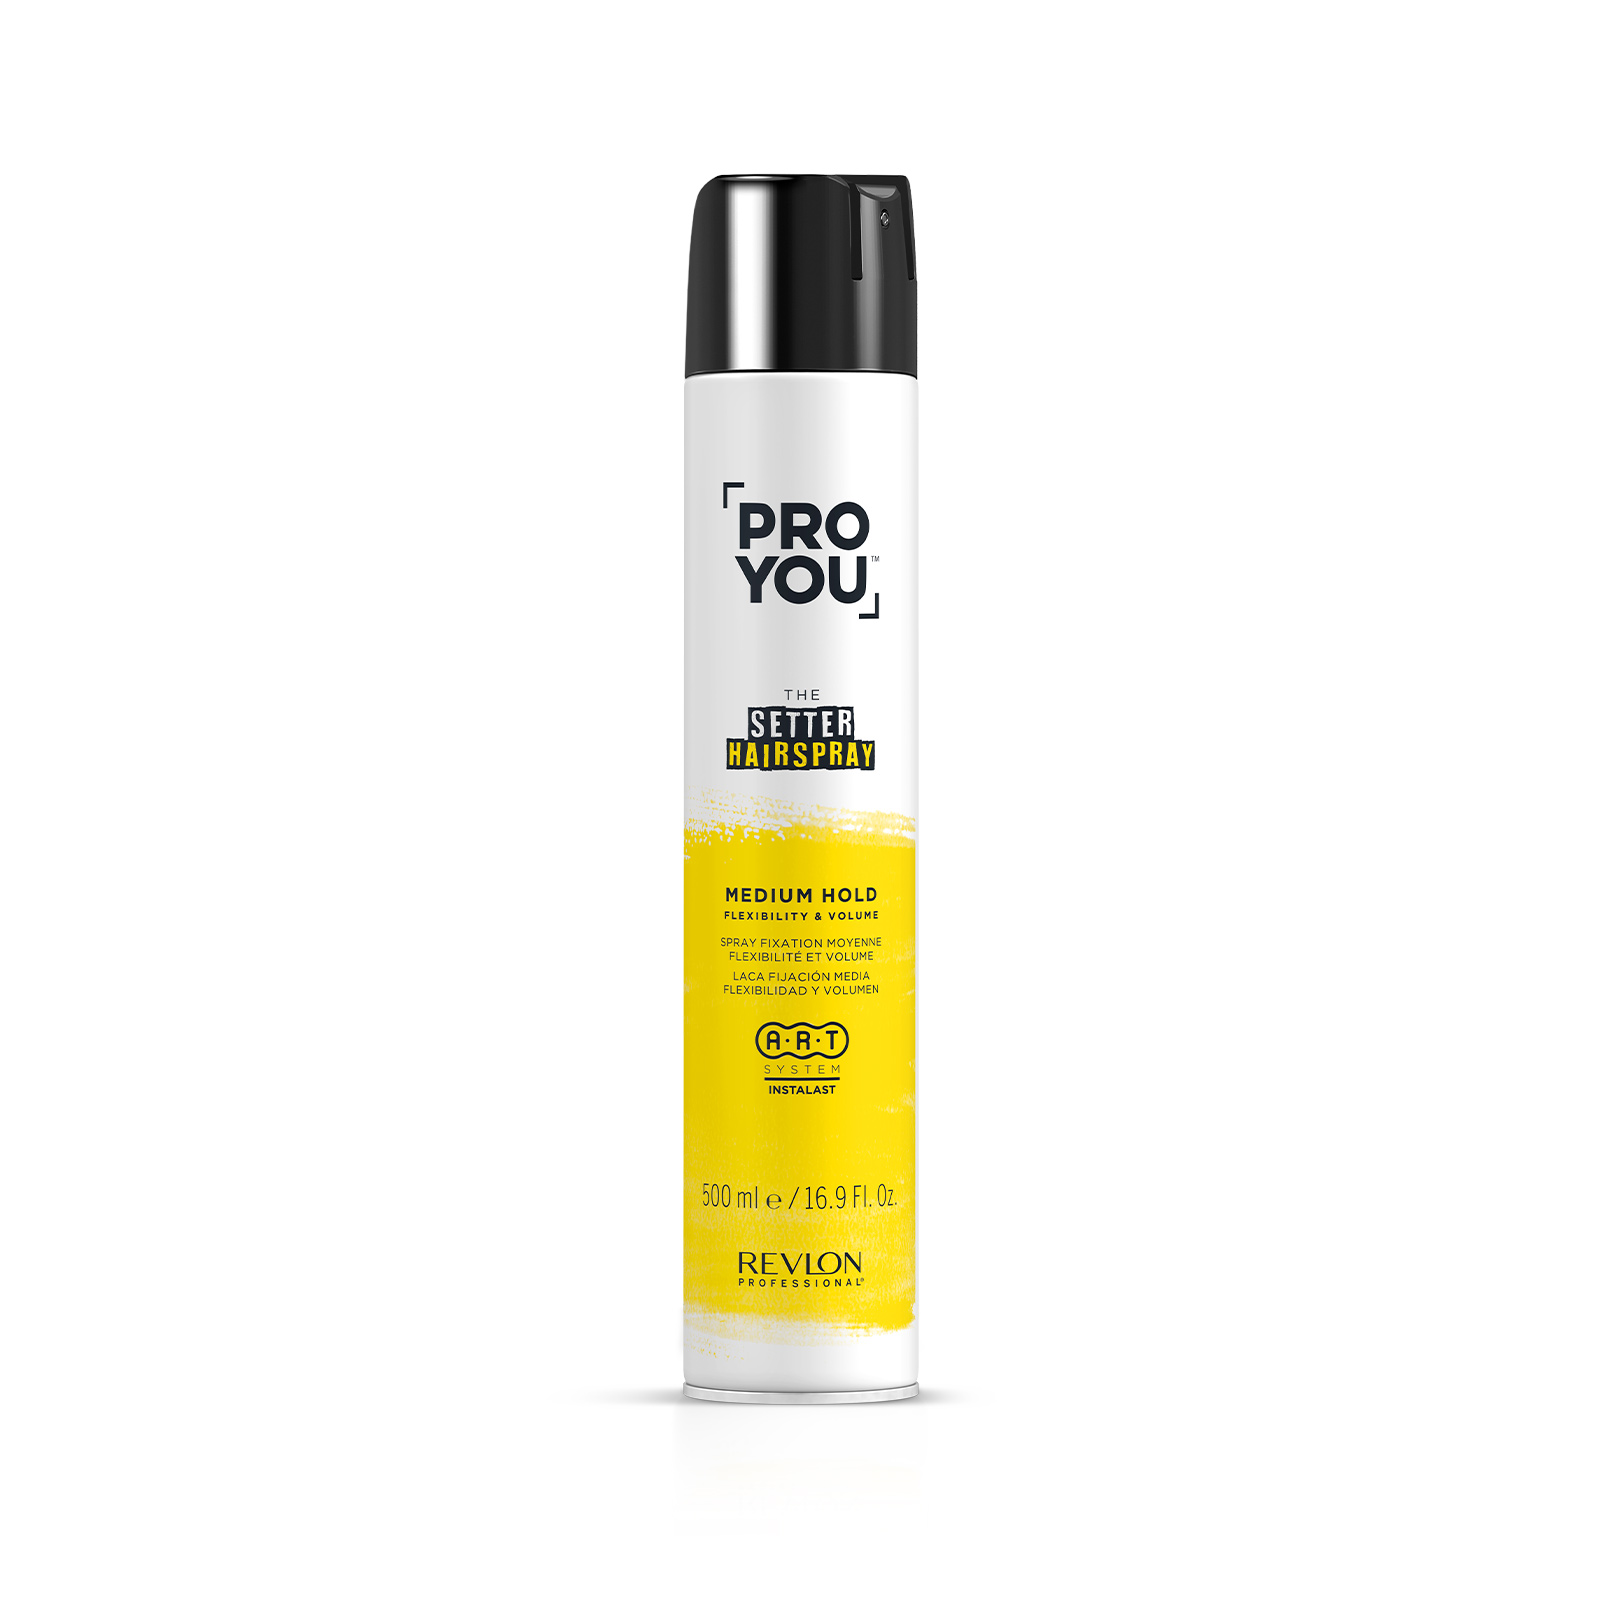 Pro You™ The Setter Medium Hold Hairspray - Revlon Professional